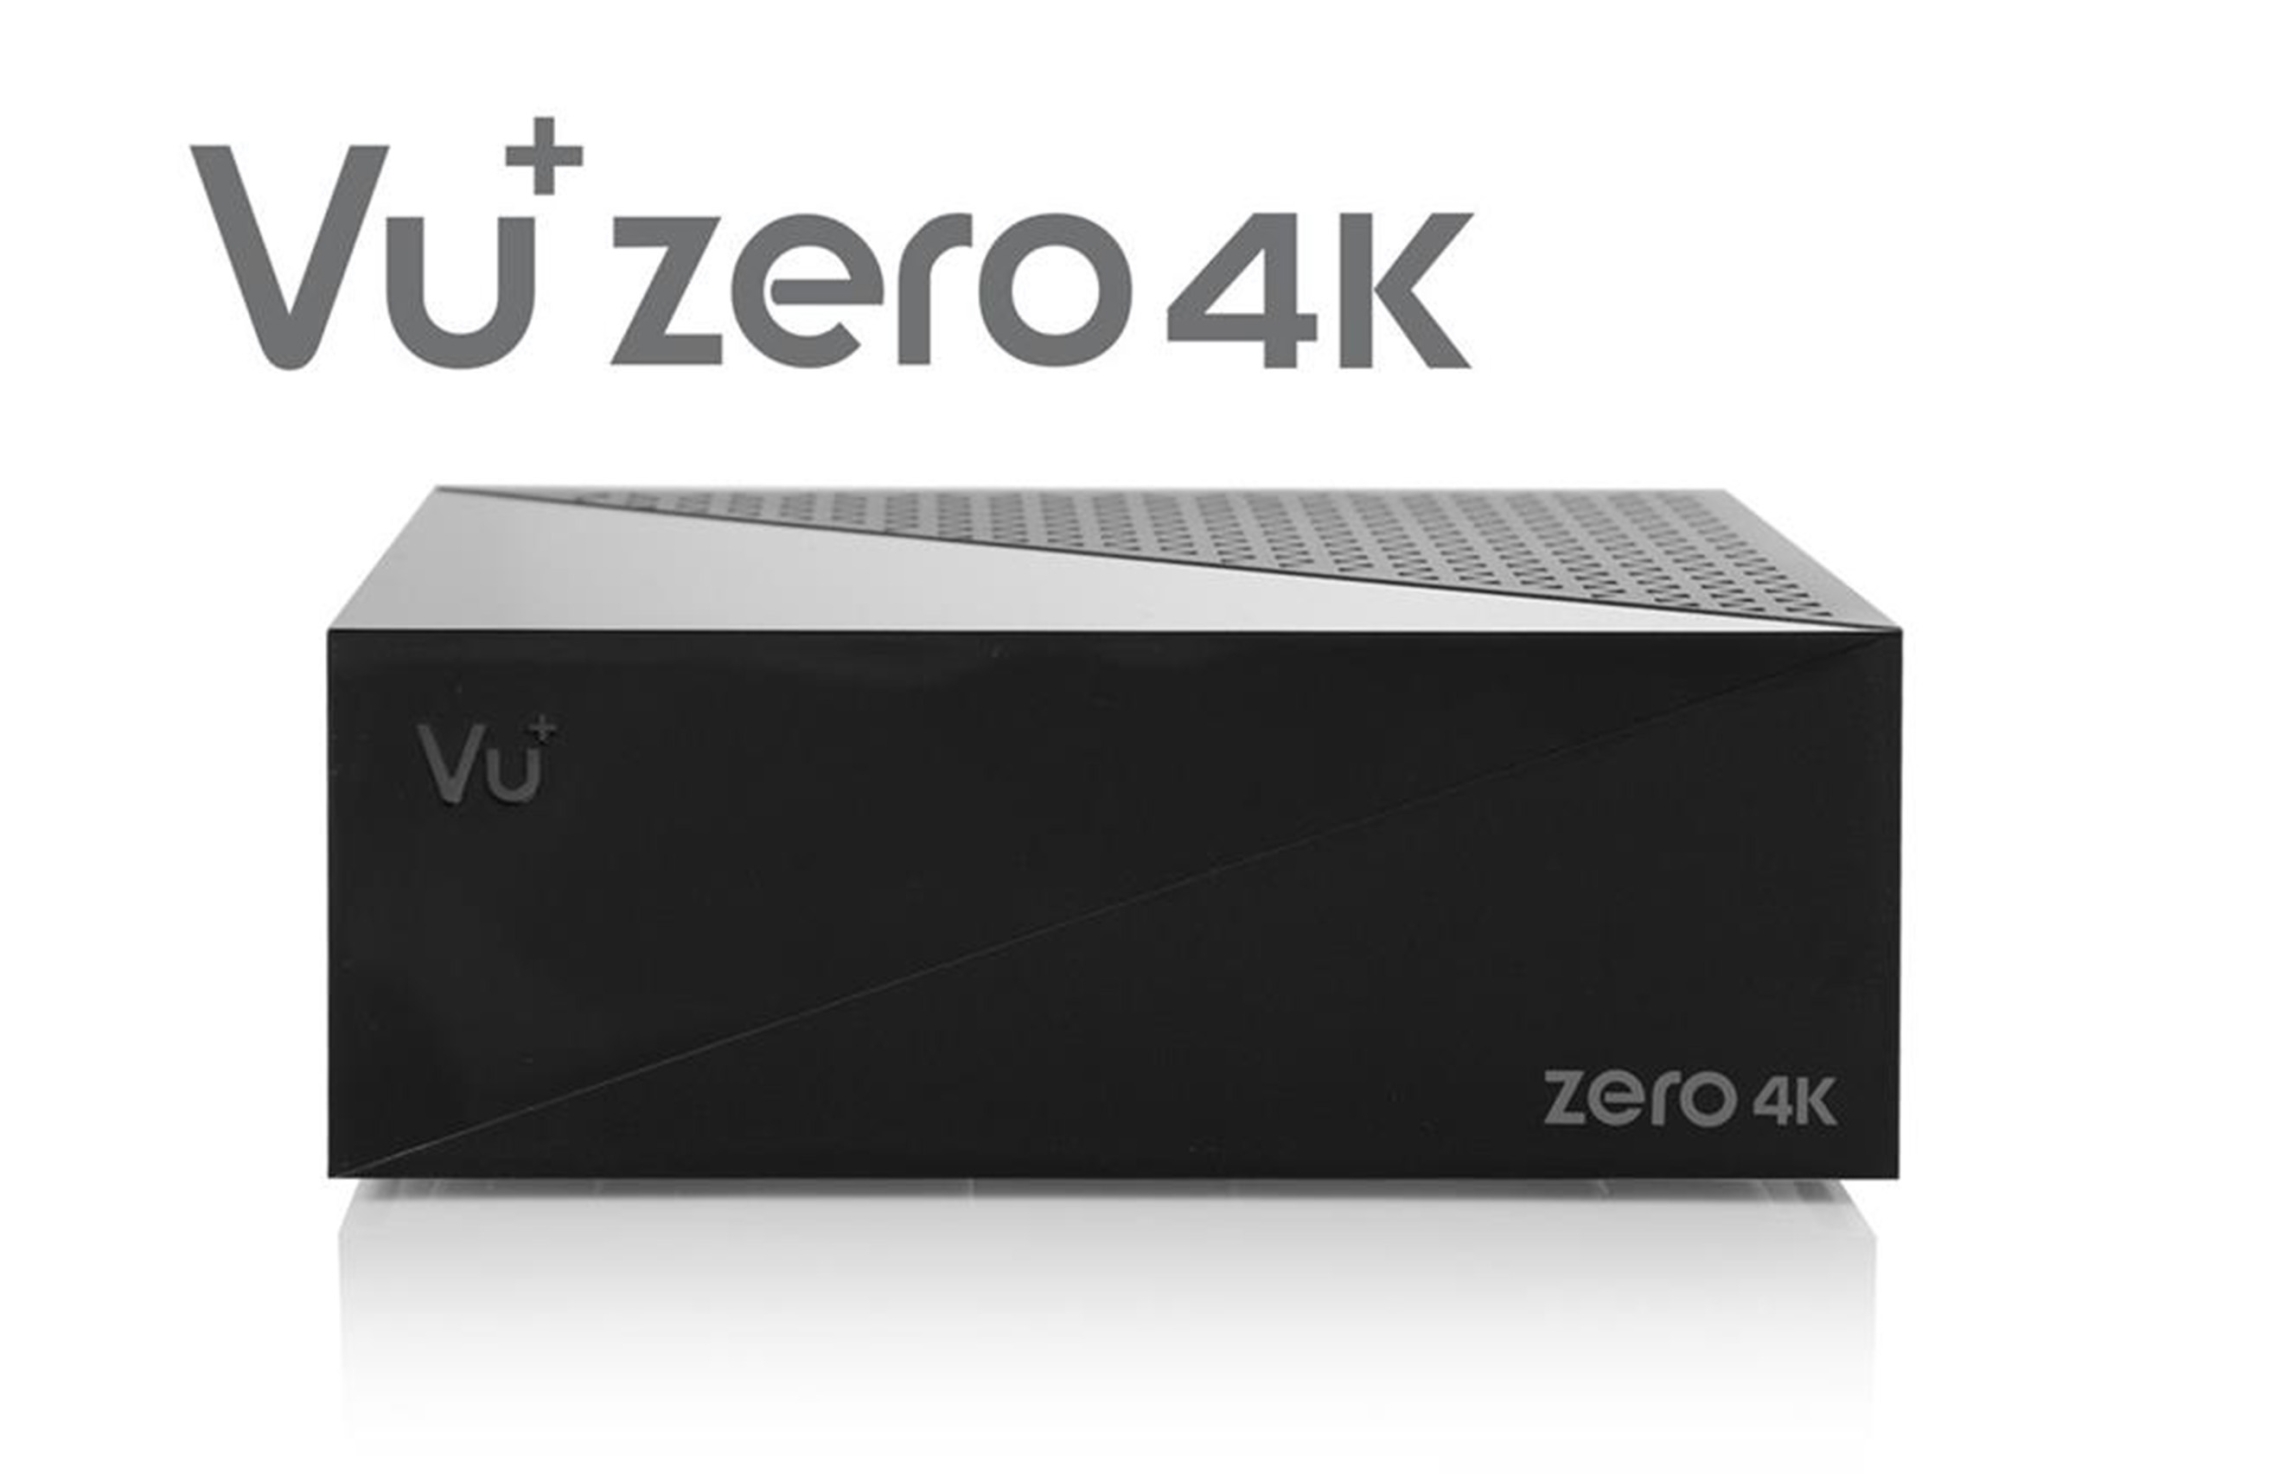 VU+Zero 4K 1x DVB-S2X Tuner Linux Receiver UHD 2160p